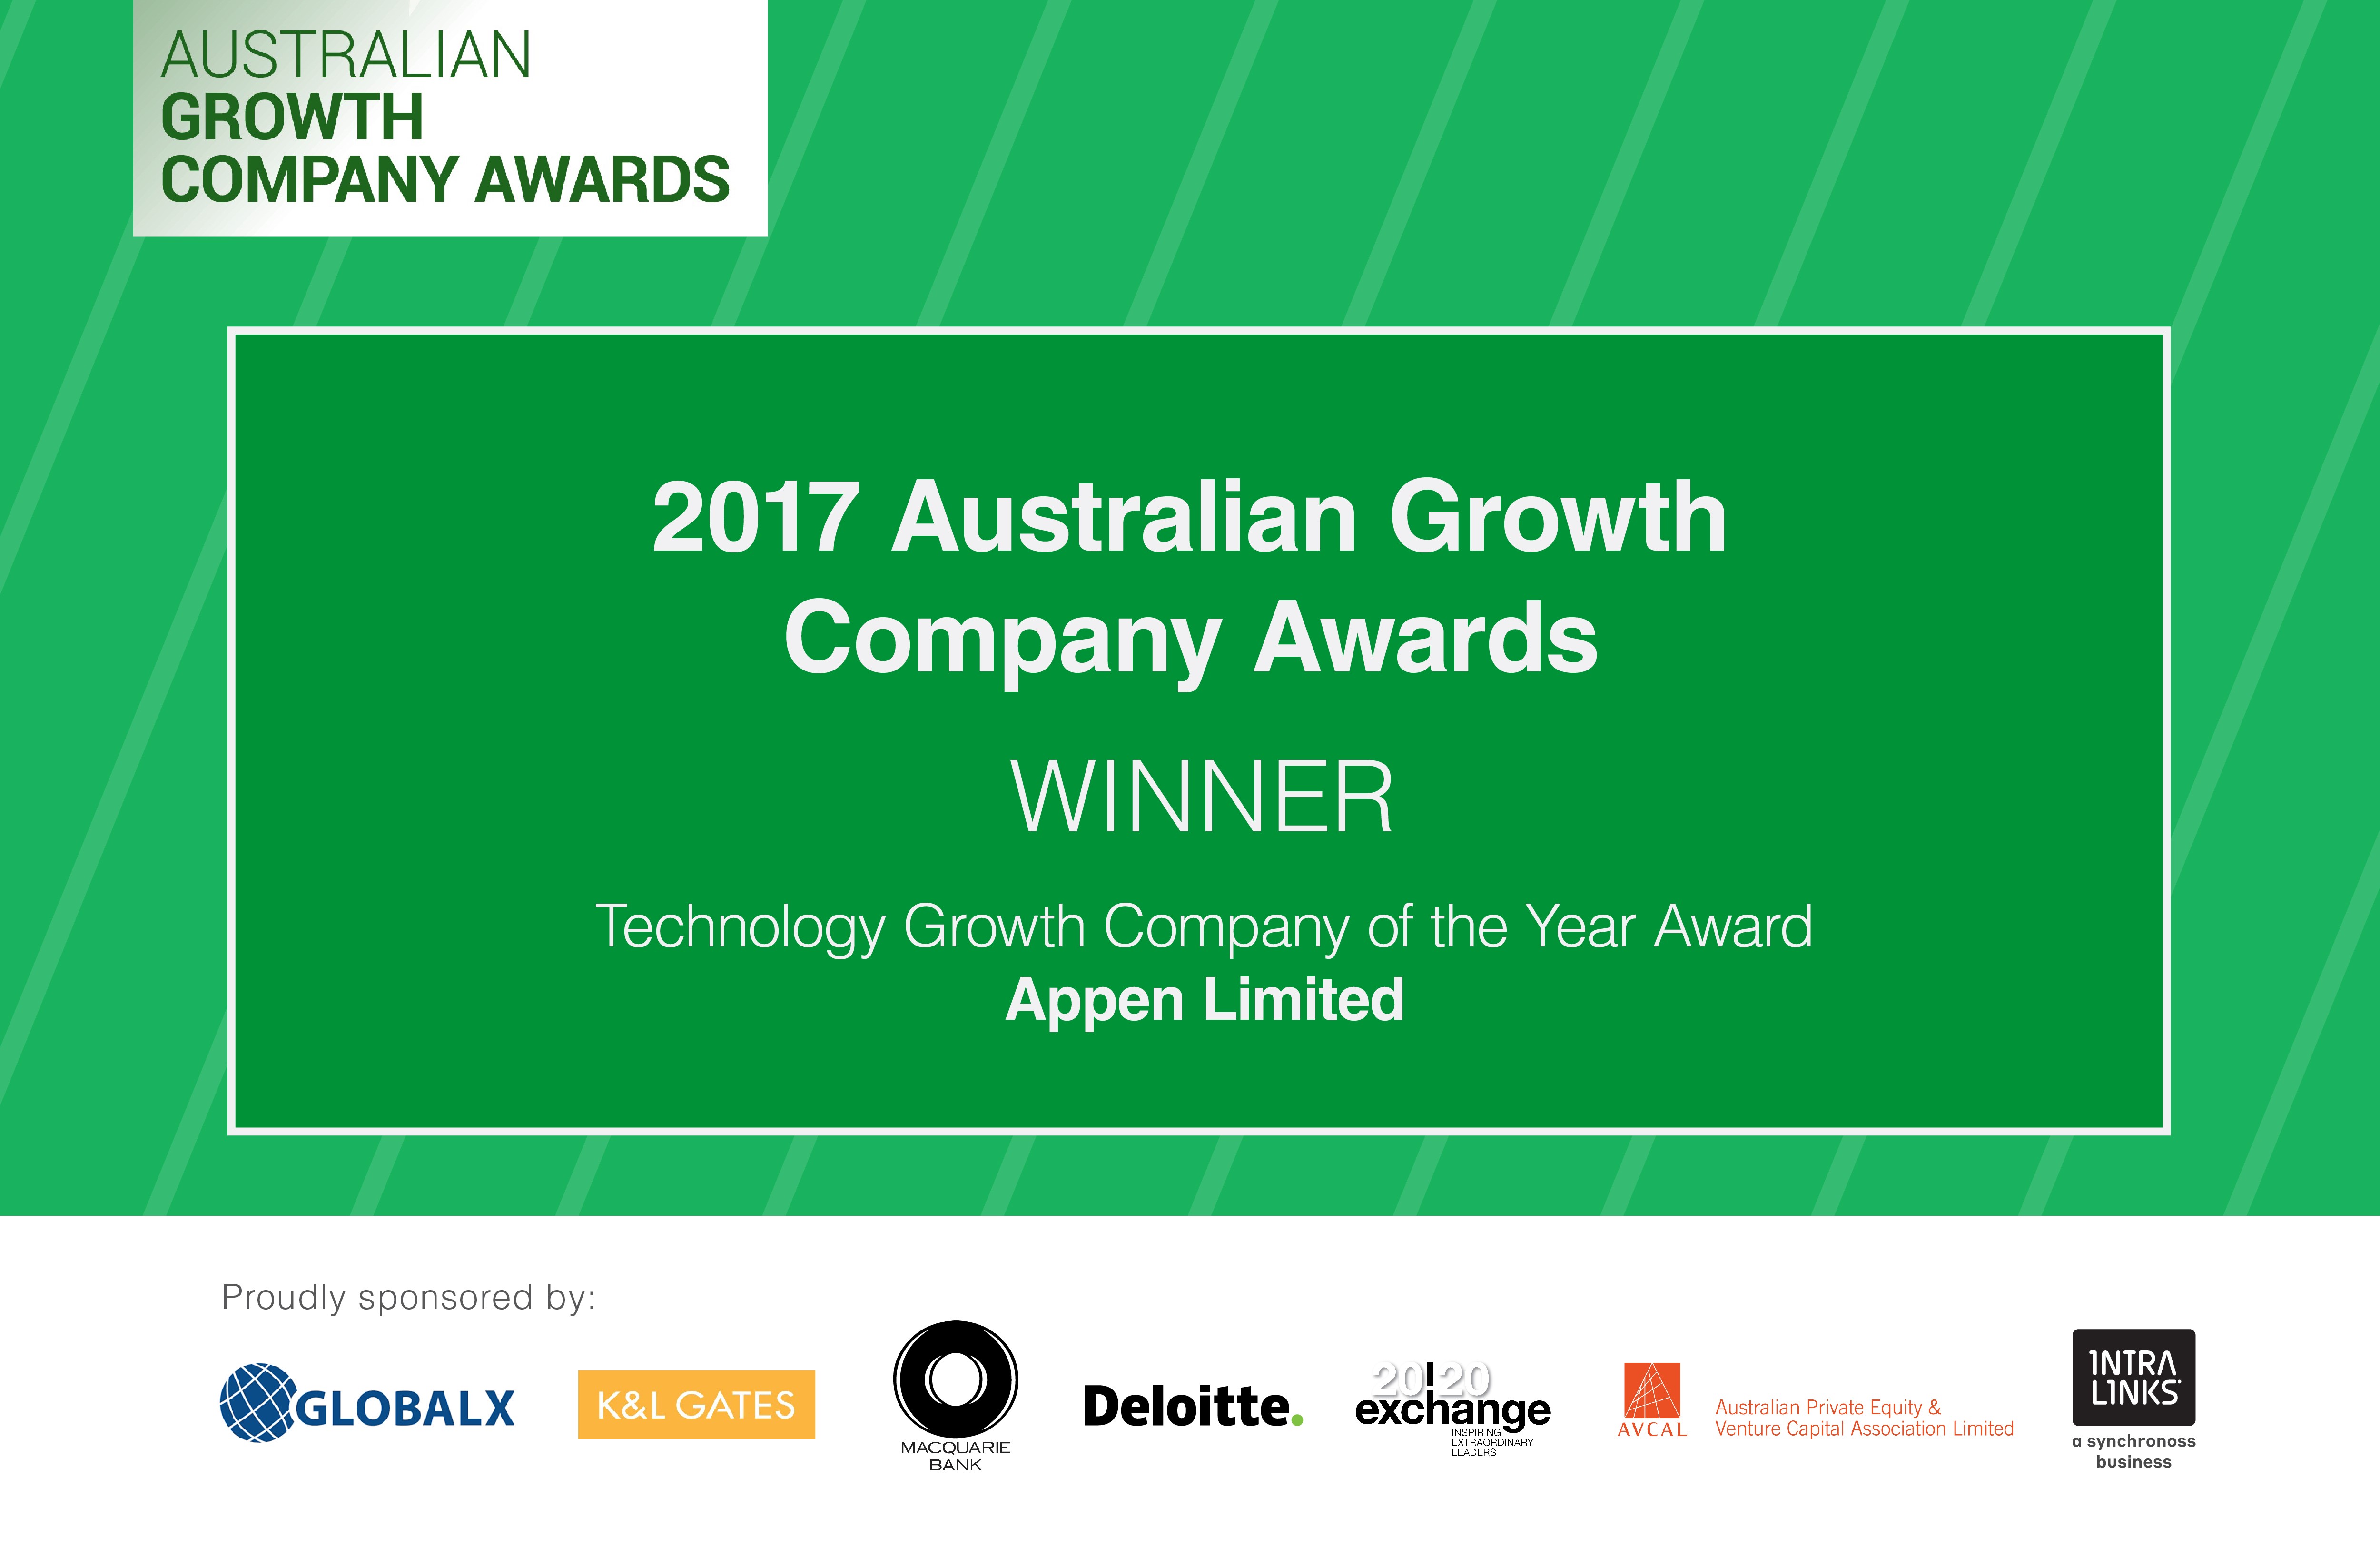 Appen Wins 2017 Technology Growth Company Award